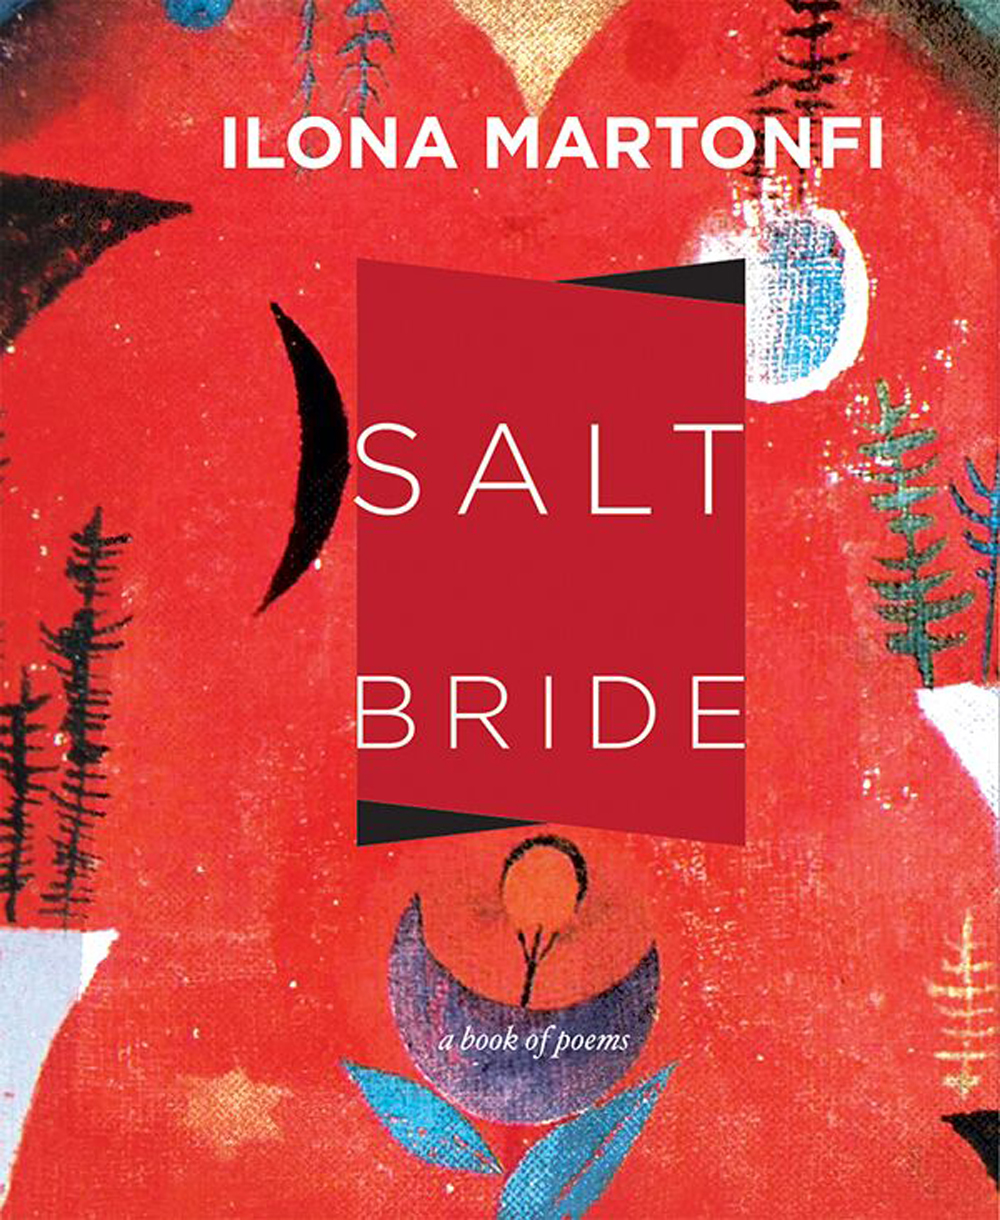 Ilona Martonfi Montreal poetry Salt Bride refugees